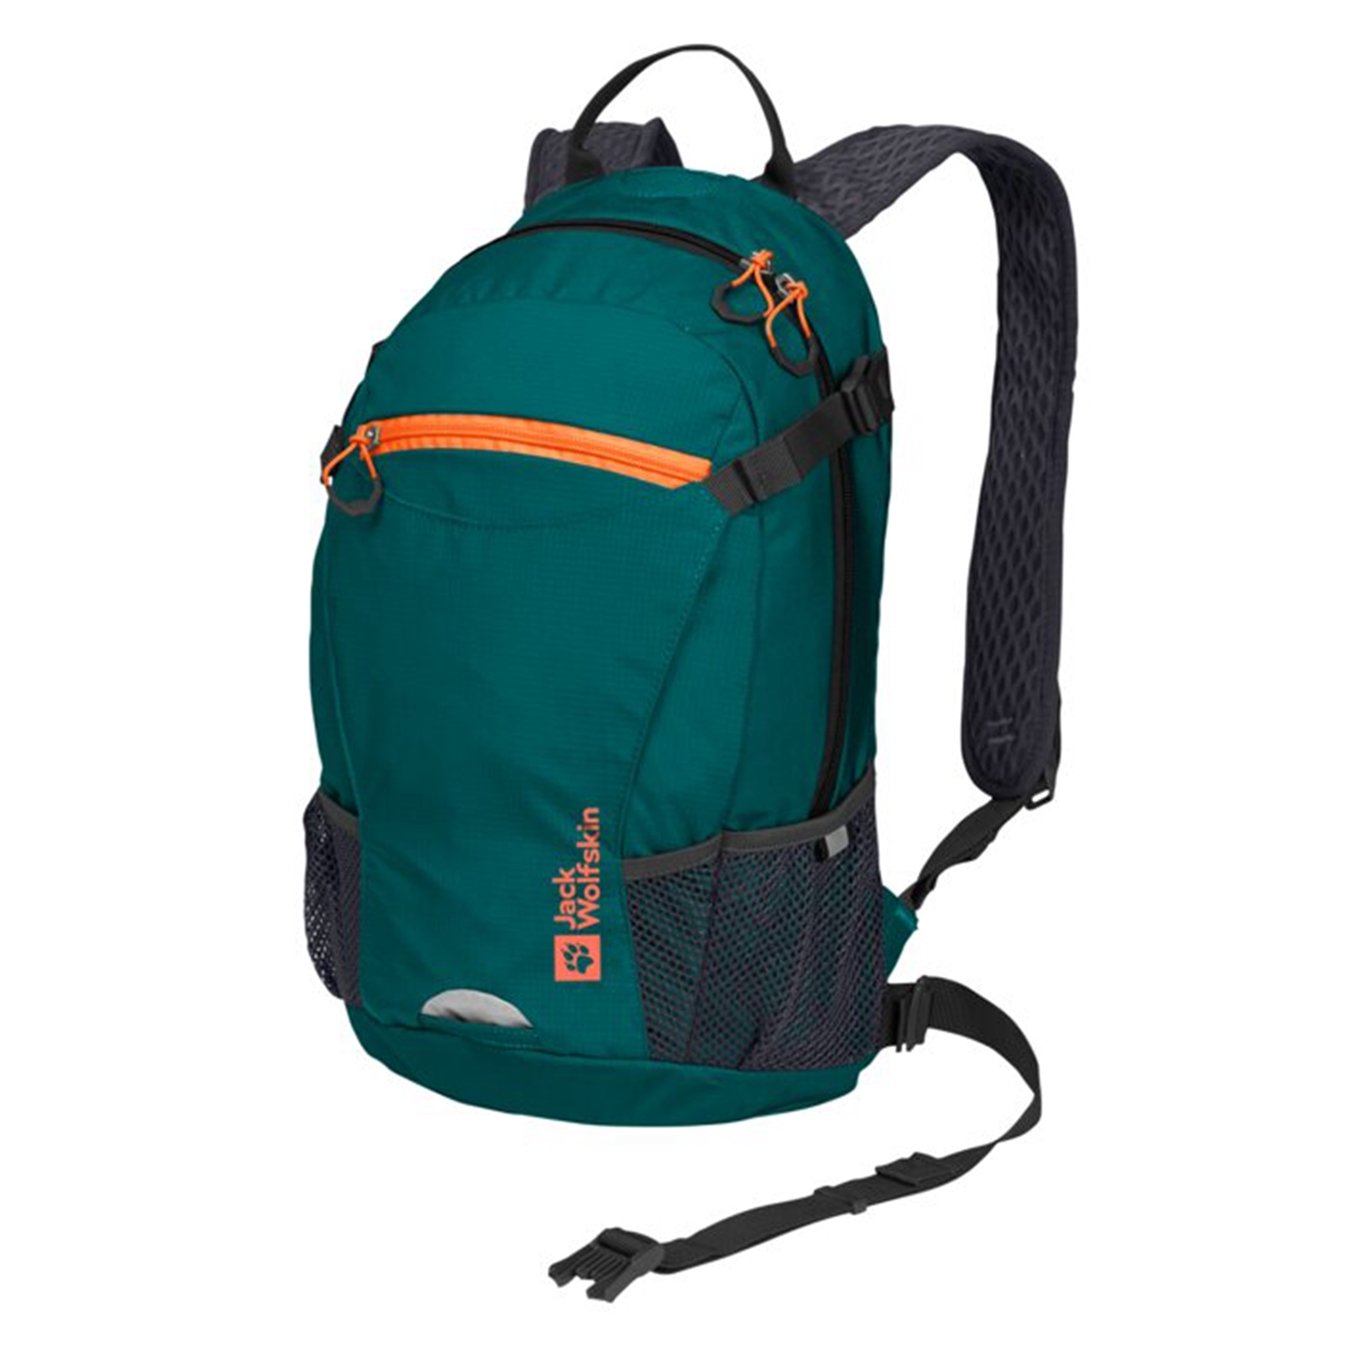 Jack Wolfskin Velocity 12 sea green backpack